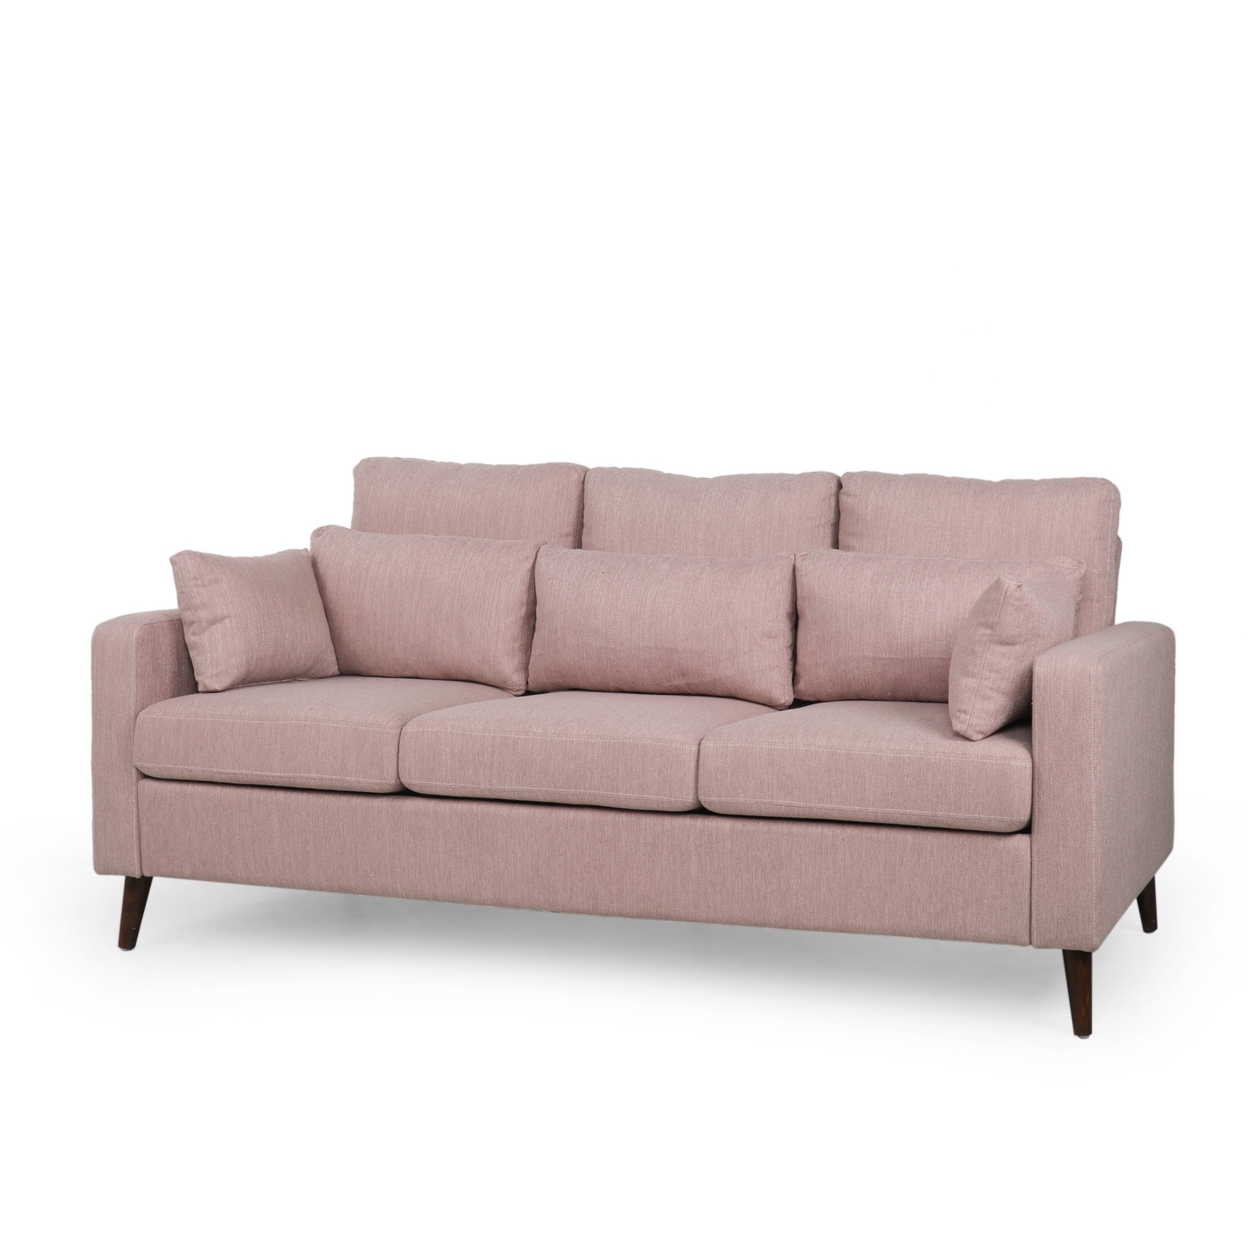 Elleah Contemporary 3 Seater Fabric Sofa - Espresso/charcoal